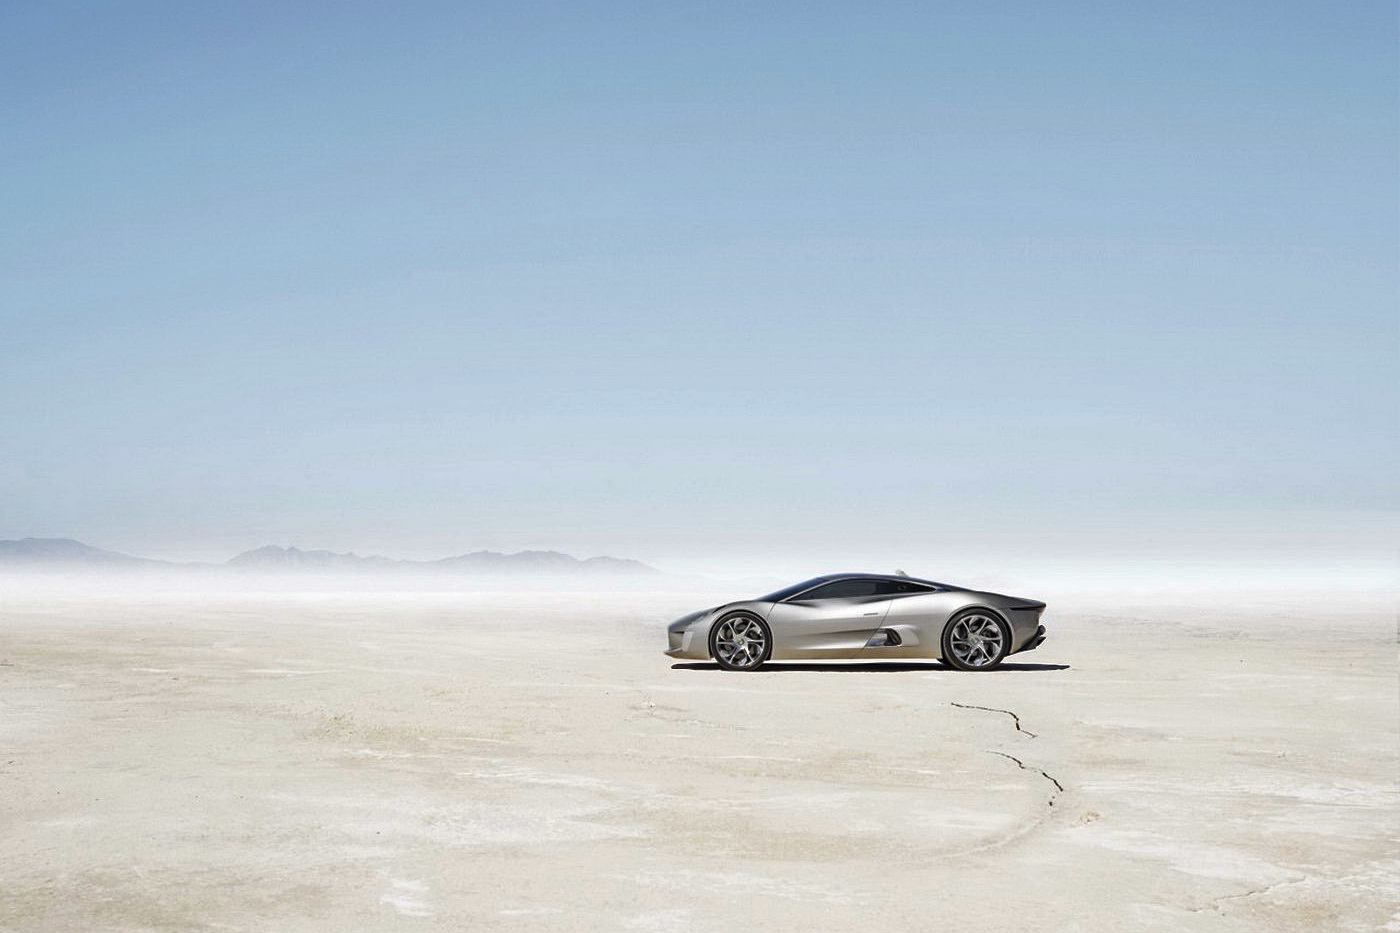 Paris Preshow: Jaguar's Micro-Turbine-Powered C-X75 Supercar Concept ...